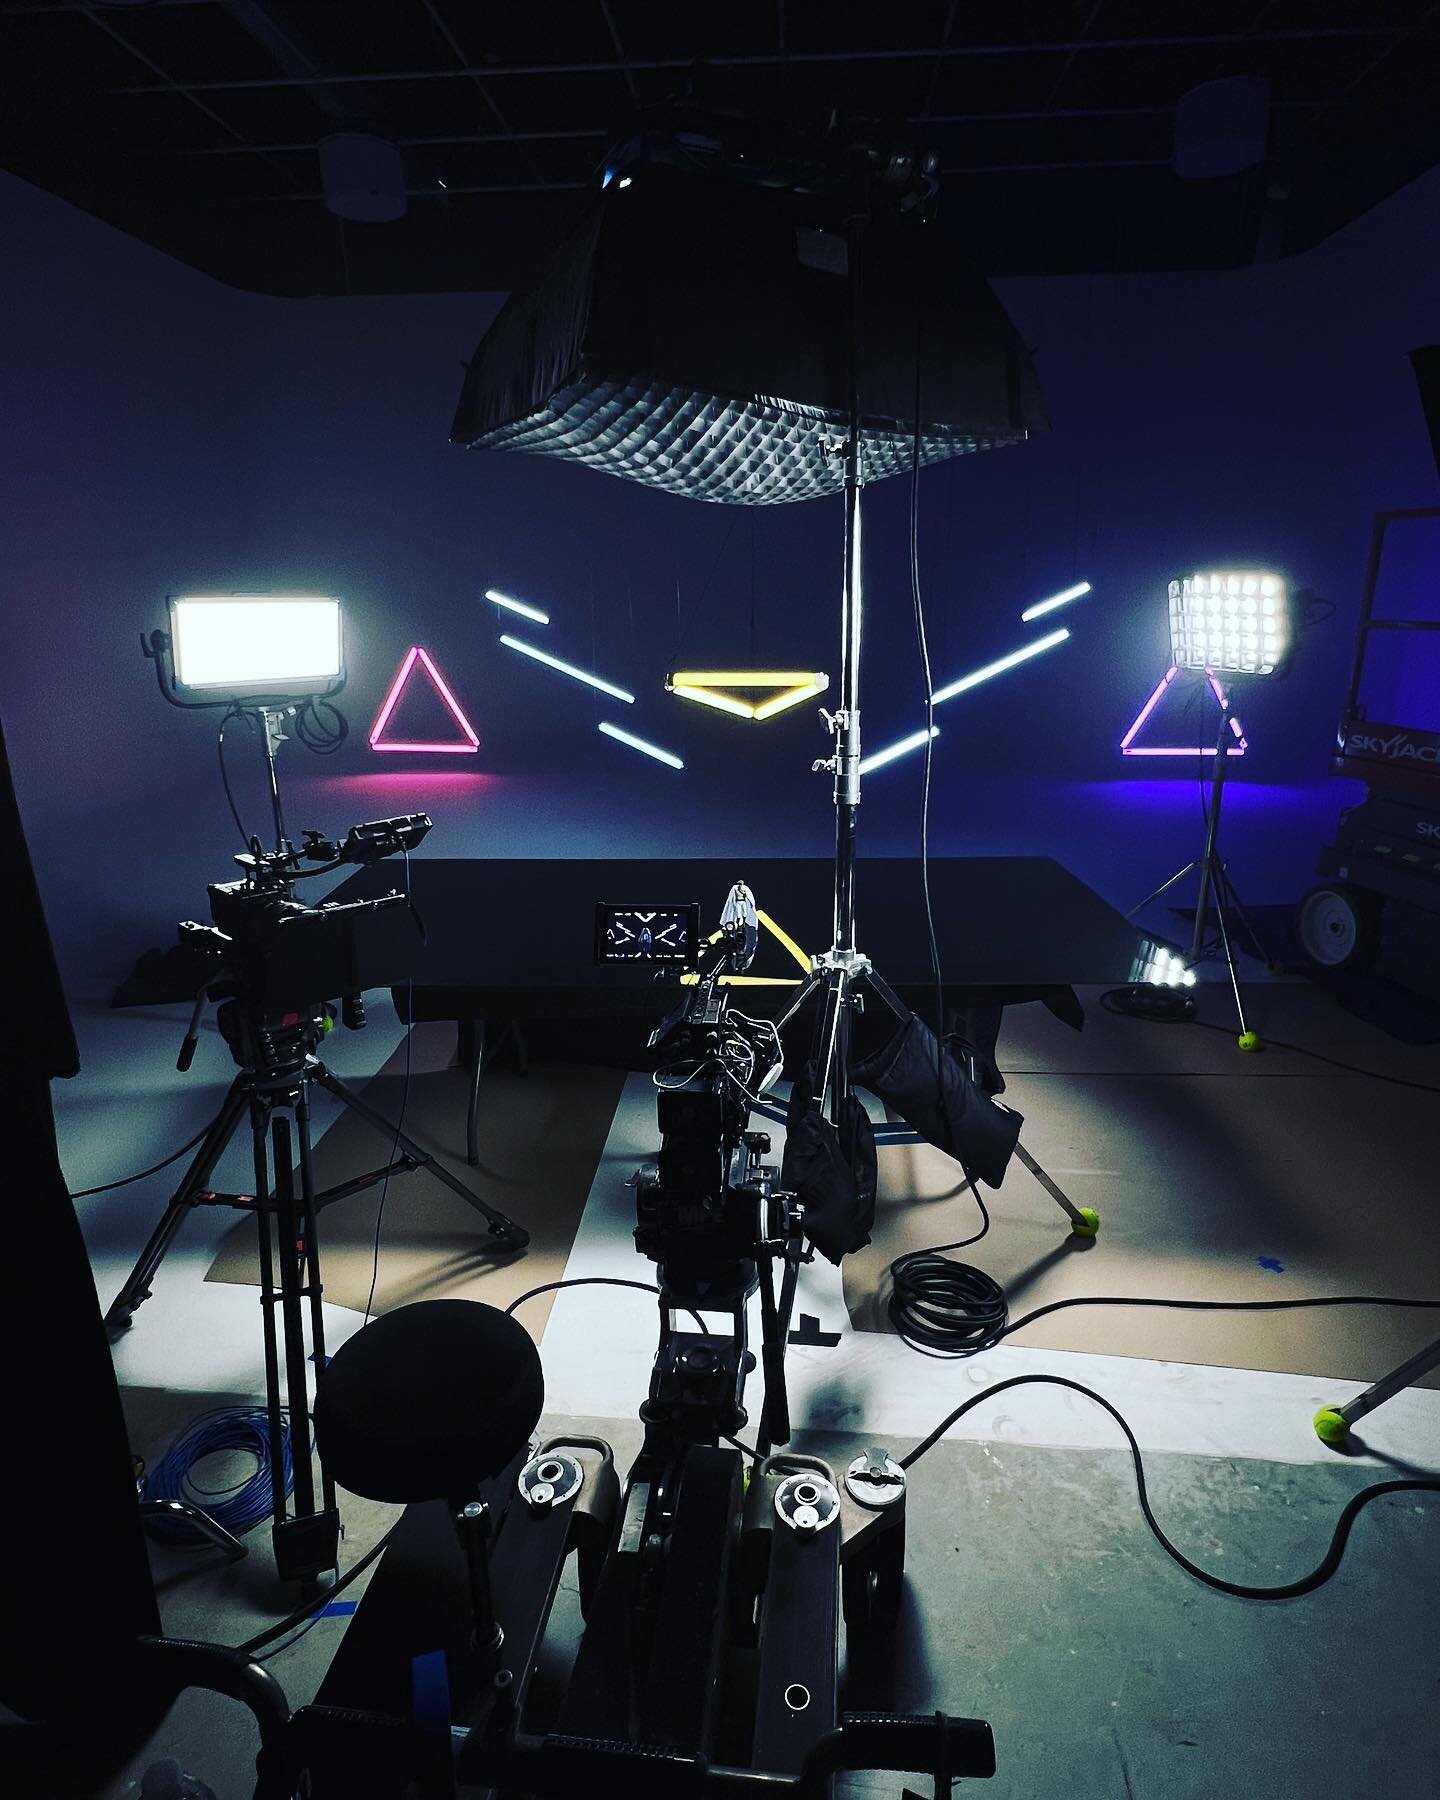 Doing some probe lens product shots with a killer lighting setup. 
.
.
.
.
#cinematography #lighting #camera #cameradept #filmmaker #production #setlife #film #commercial #astera #asteratubes #arriskypanel #shotonred #cine #cinefile #atx #austin